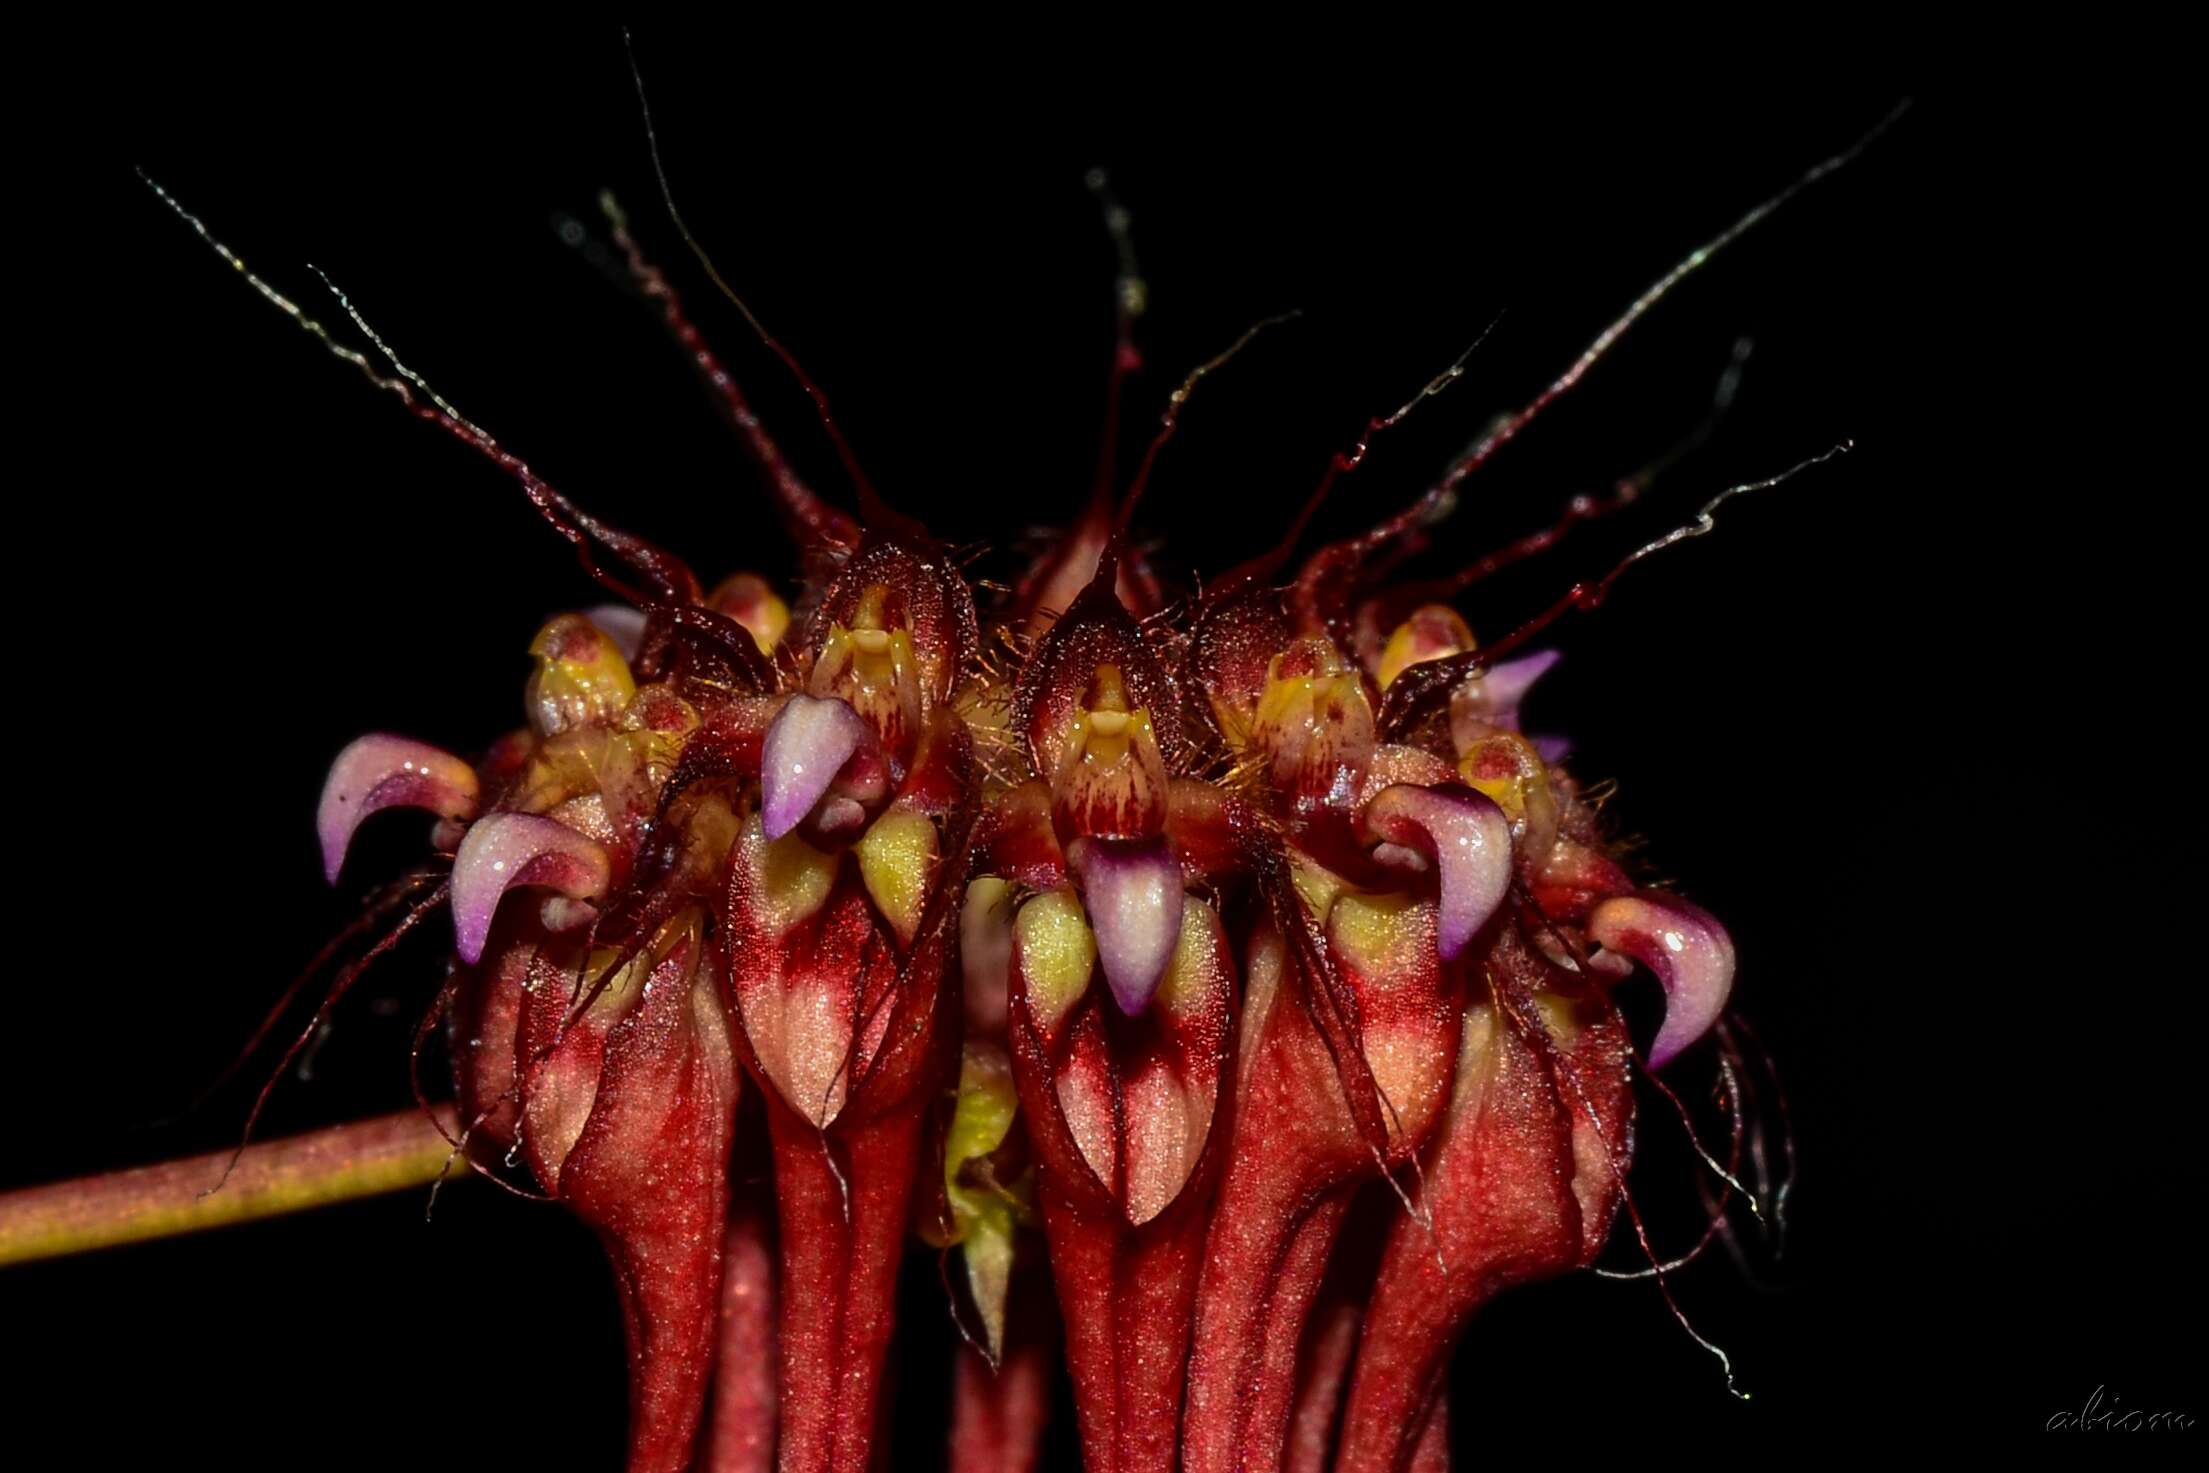 Image de Bulbophyllum gracillimum (Rolfe) Rolfe